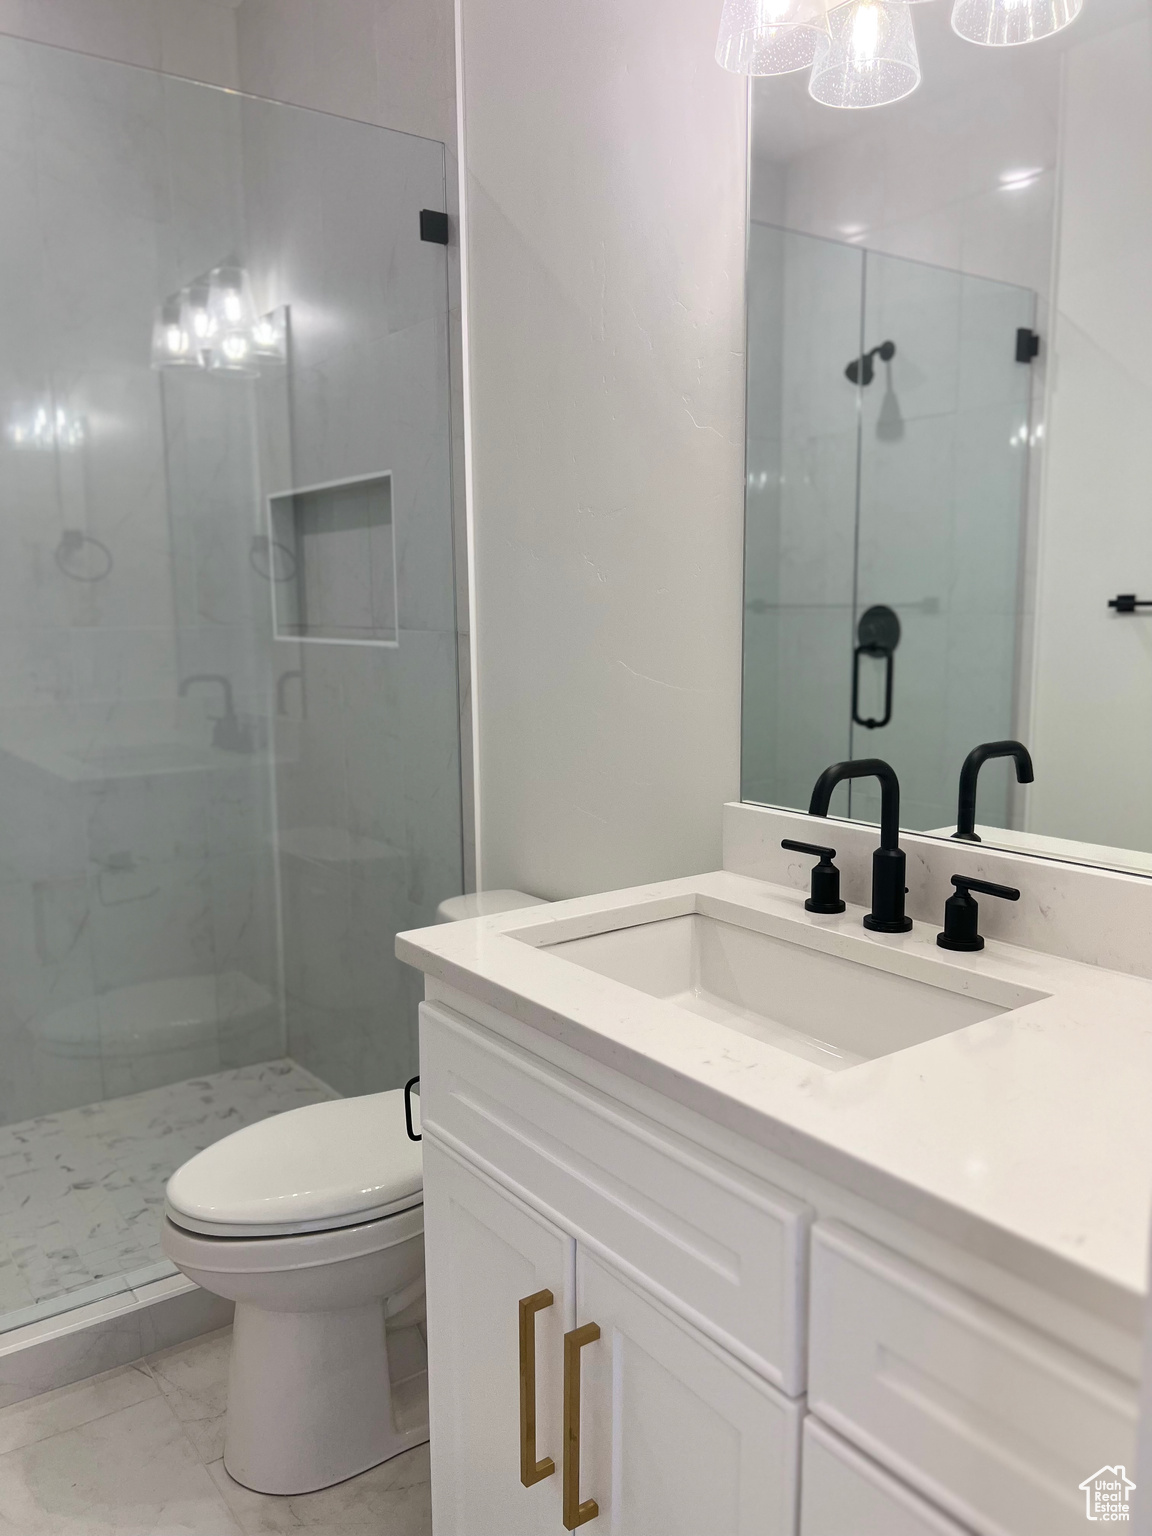 Bathroom with a shower with door, tile flooring, oversized vanity, and toilet